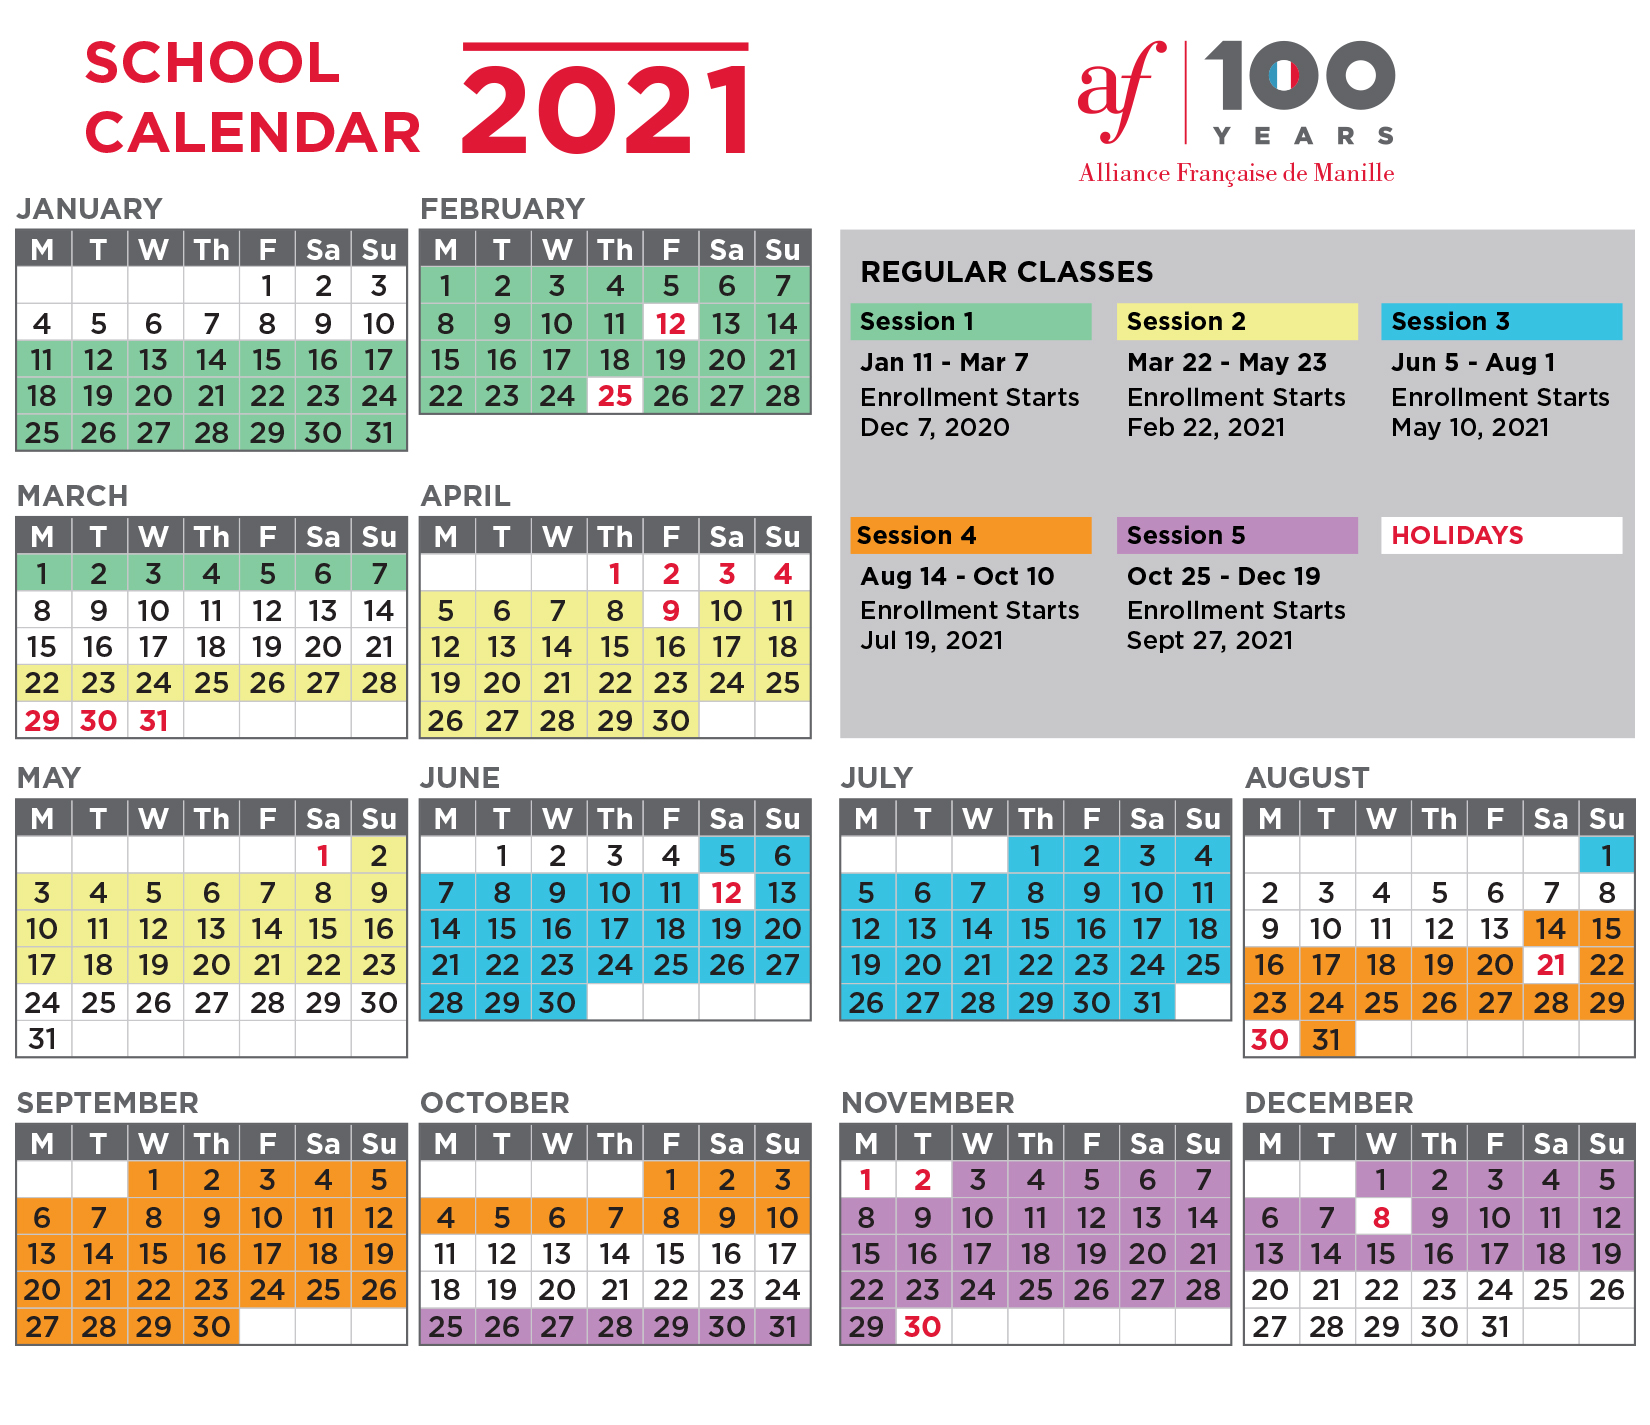 School Calendar Alliance française